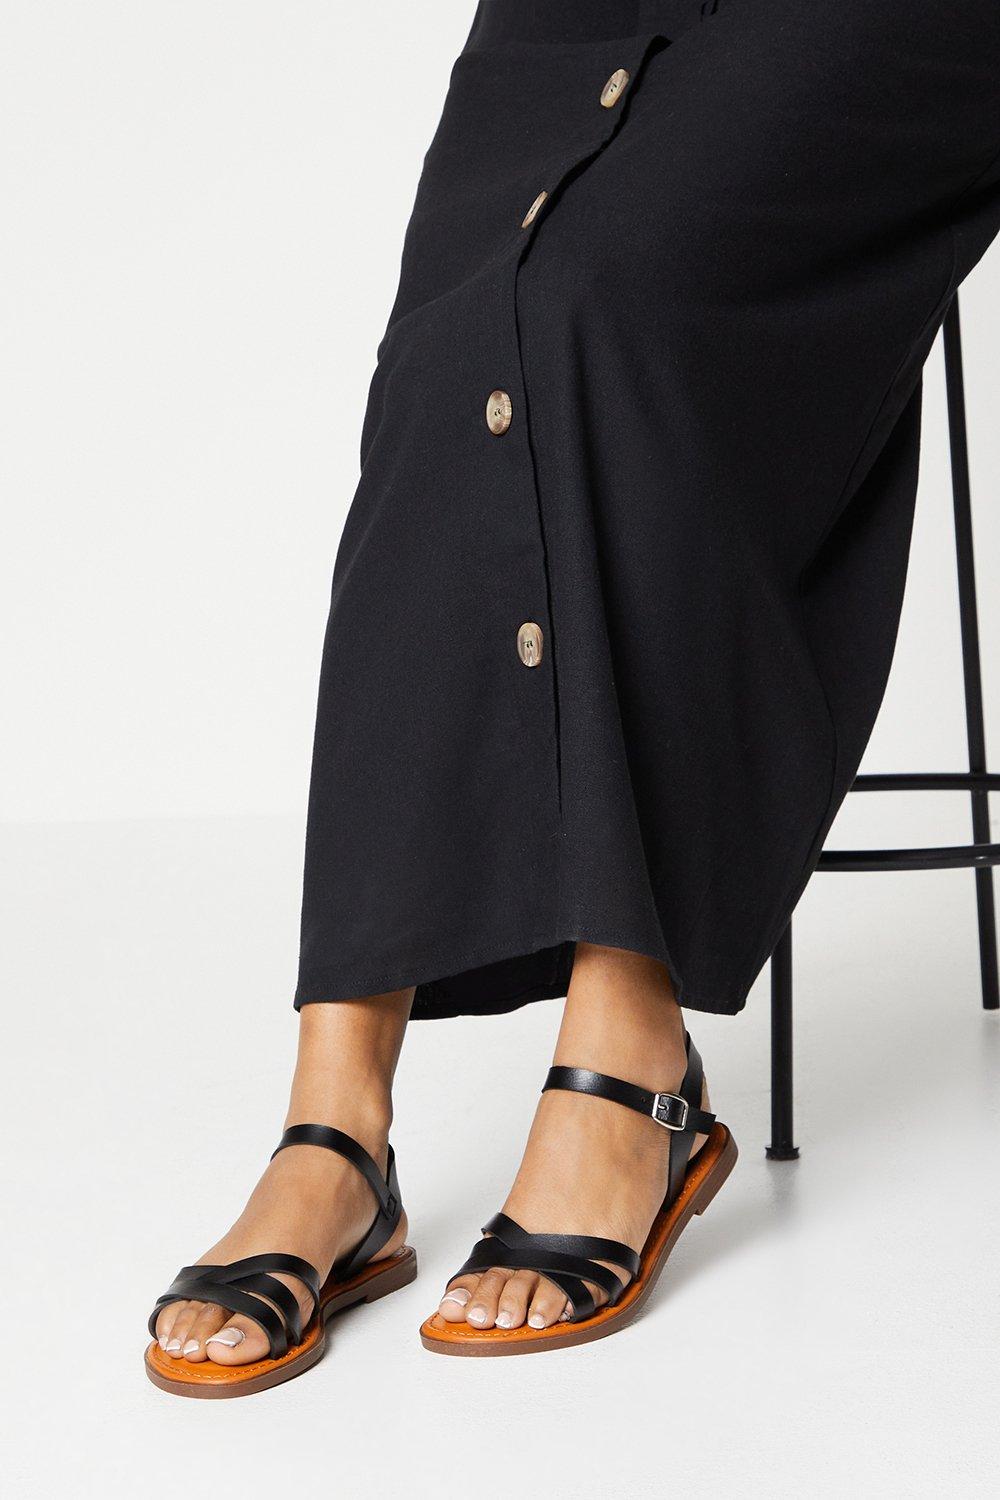 Women’s Good For The Sole: Melanie Comfort Cross Strap Flat Sandals - black - 3